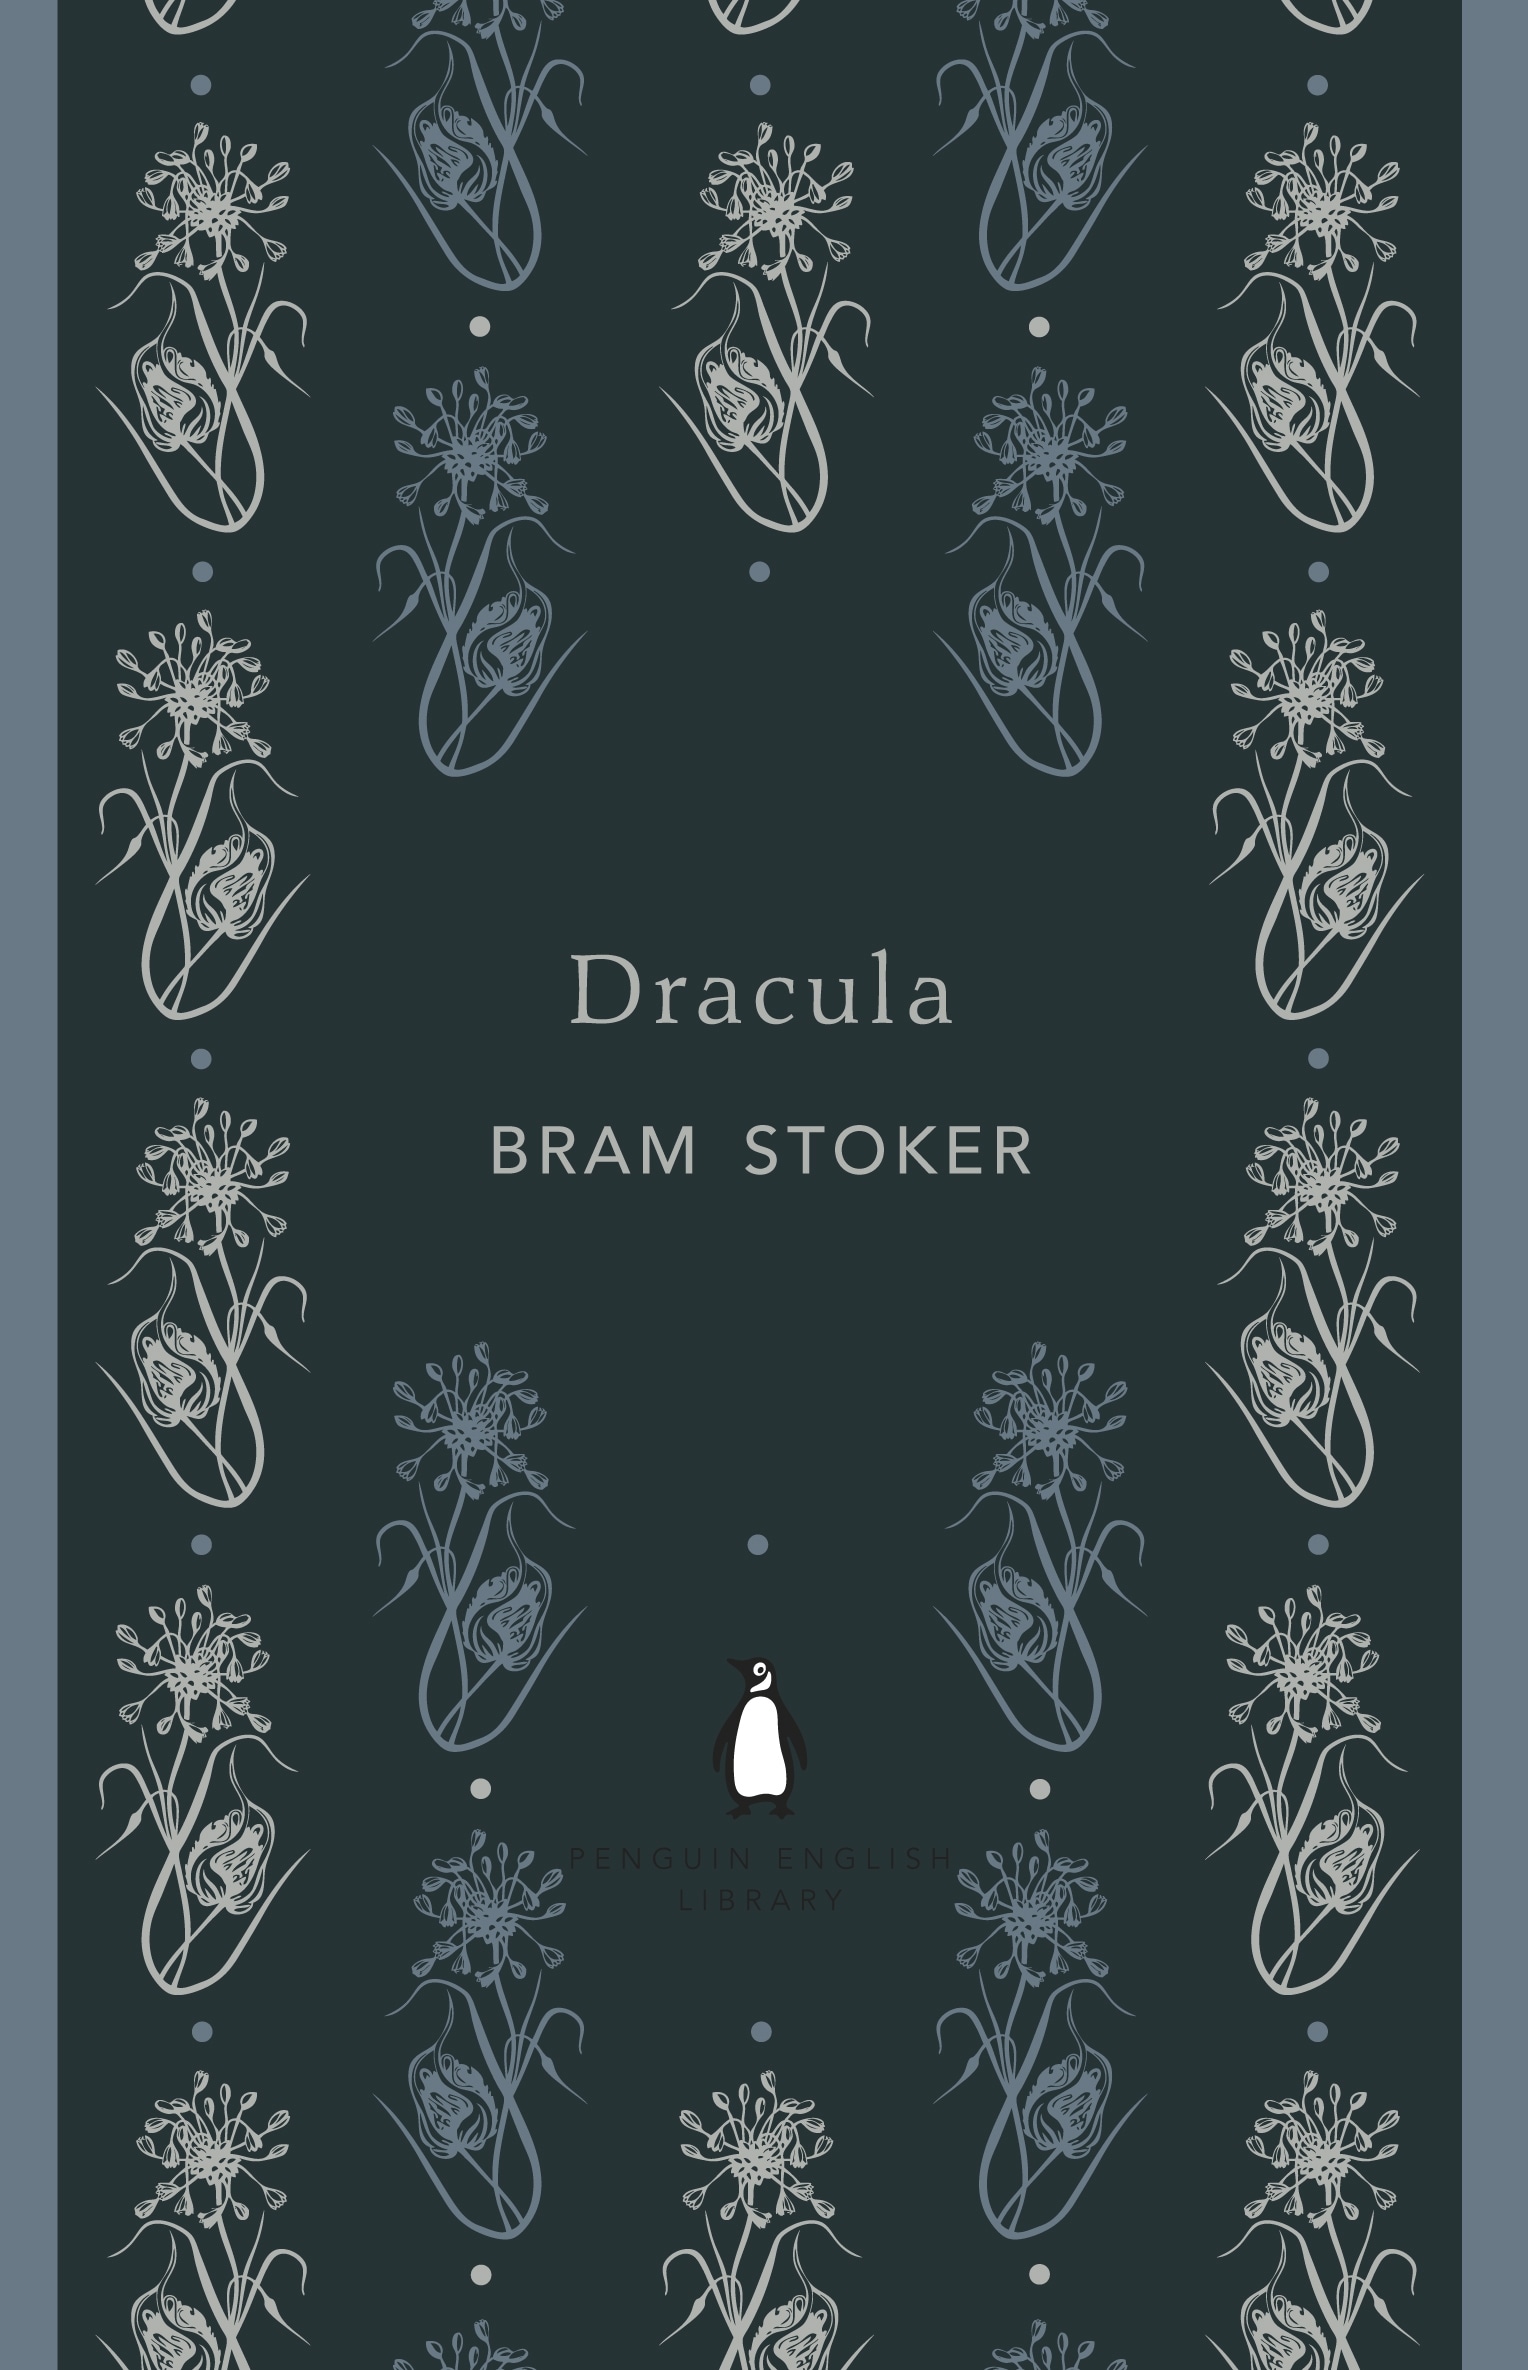 Book “Dracula” by Bram Stoker — April 26, 2012